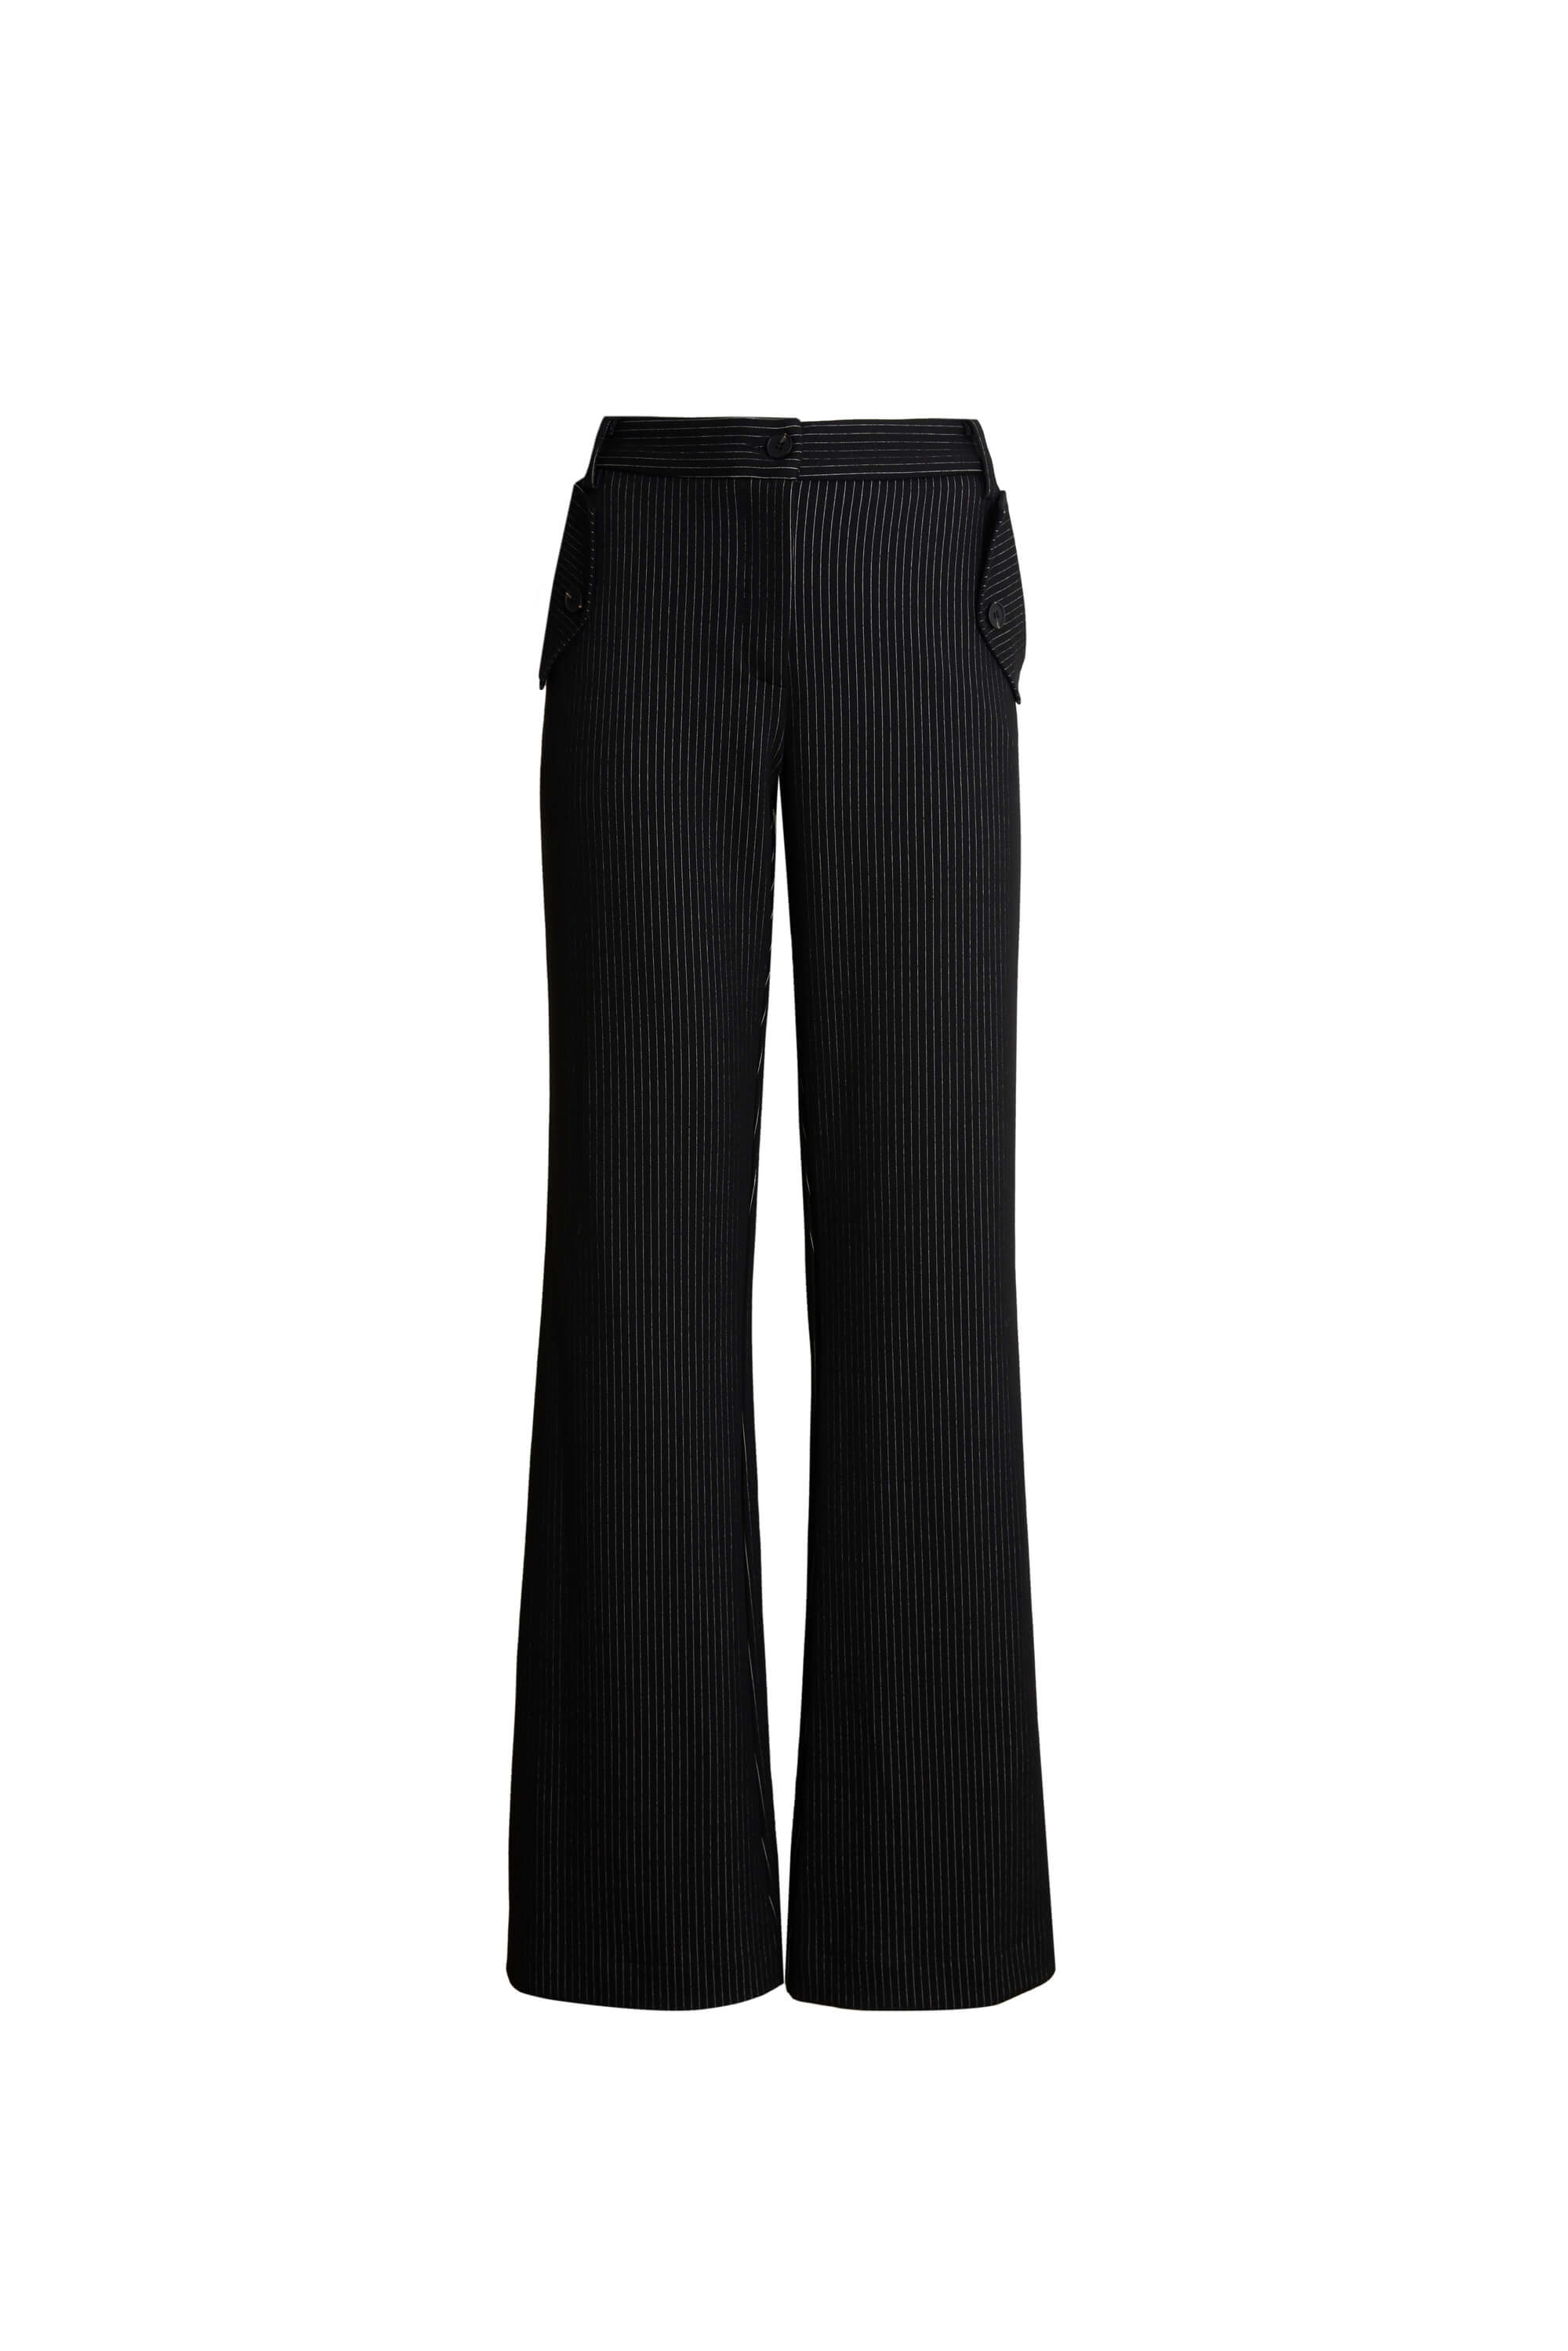 Women’s Black Pin Stripe Tailored Trousers XXL James Lakeland